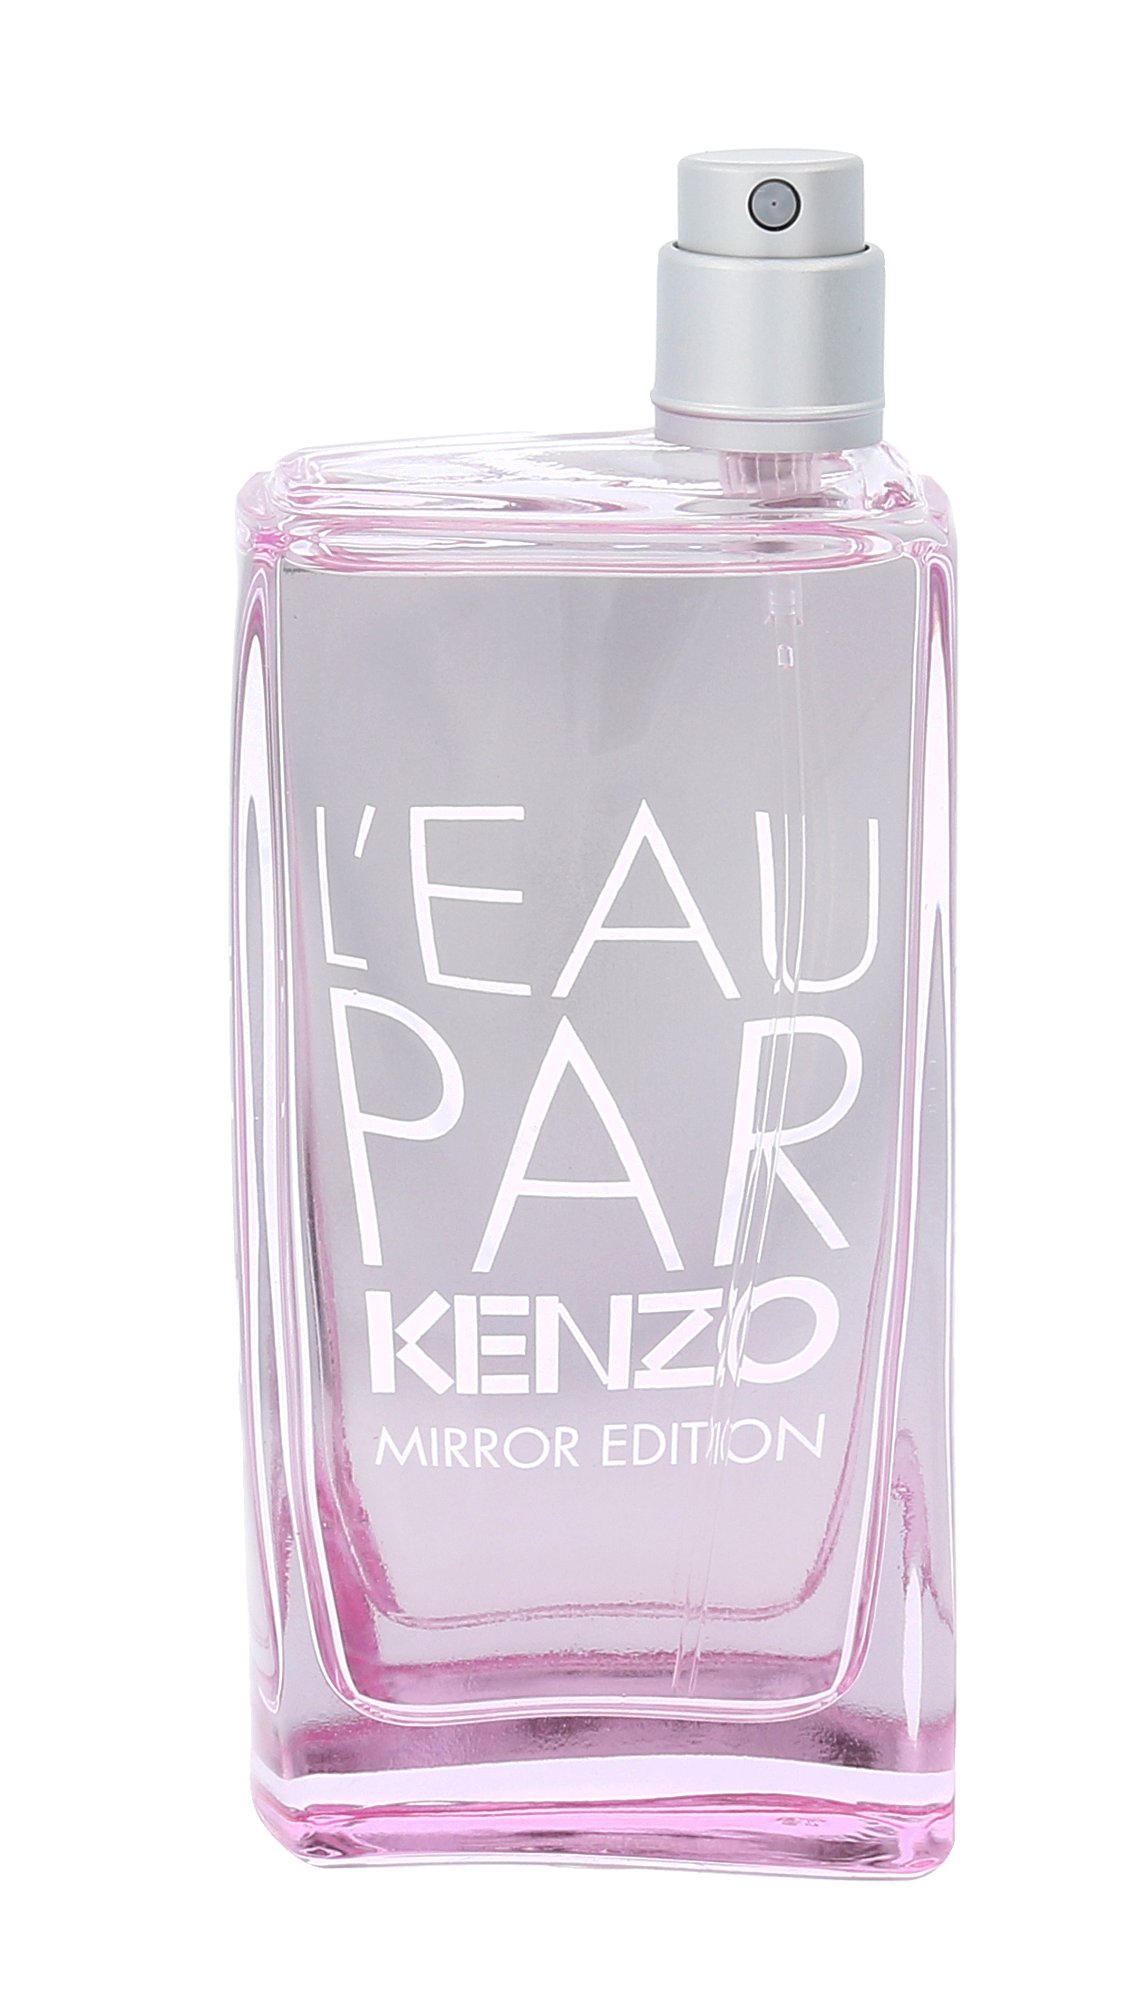 KENZO L´eau par Kenzo Mirror Edition, Toaletní voda 50ml, Tester